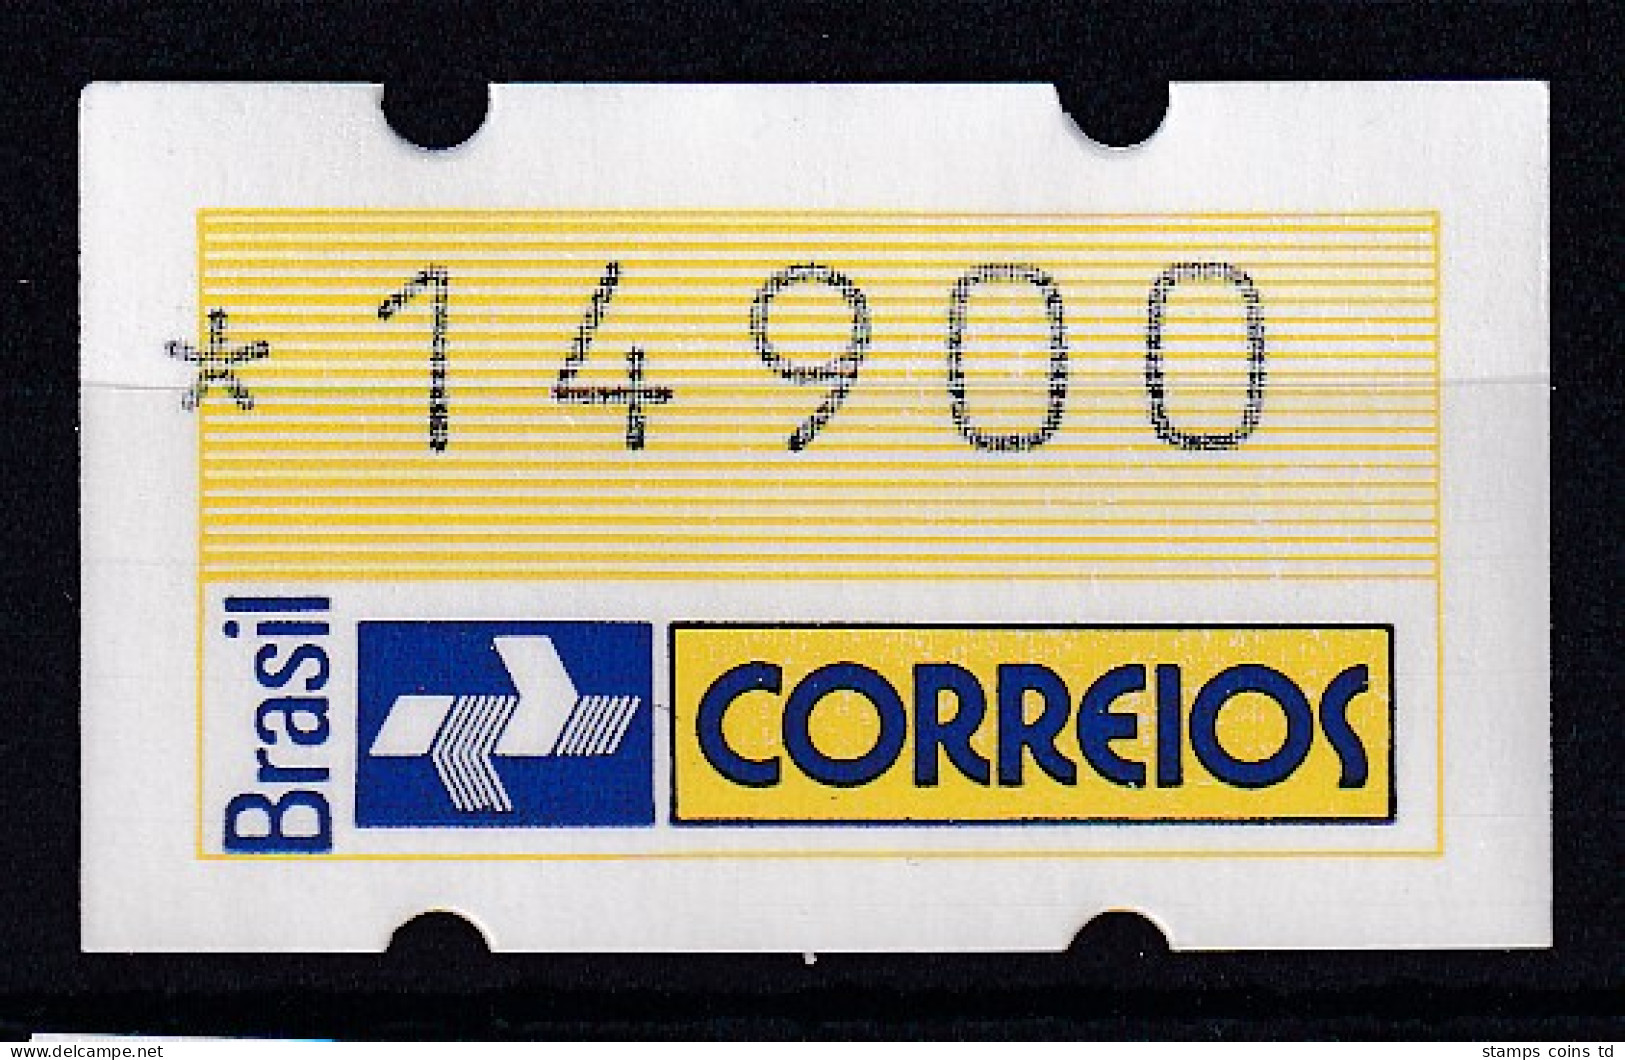 Brasilien 1993 ATM Postemblem Wertstufe 14900 Postfrisch ** - Viñetas De Franqueo (Frama)